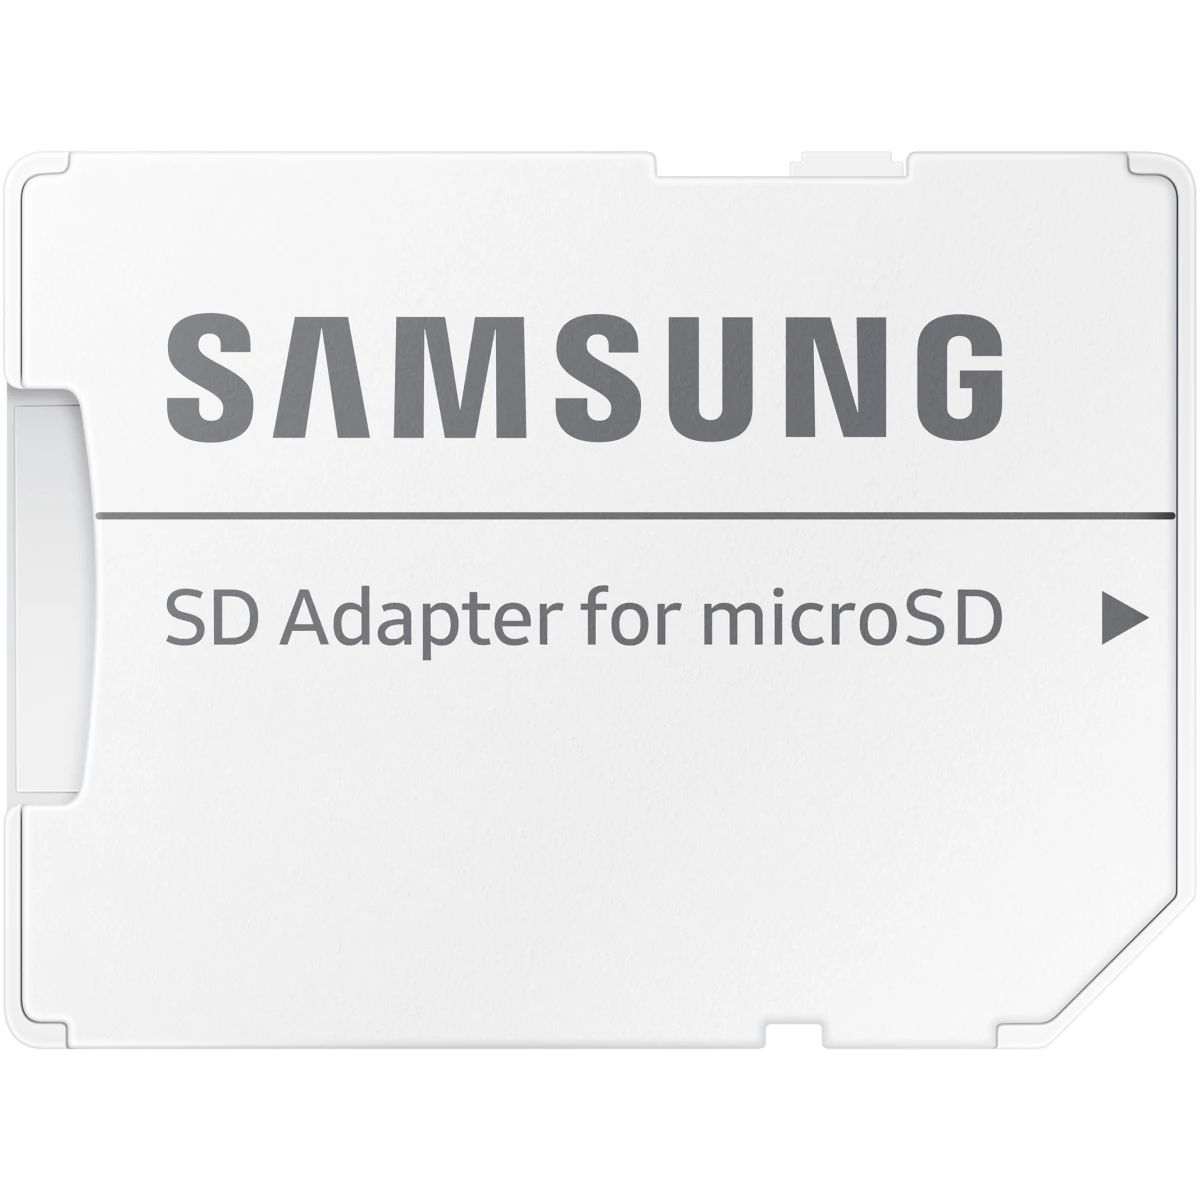 32GB Samsung PRO Endurance microSDHC 100MB/s +Adapter